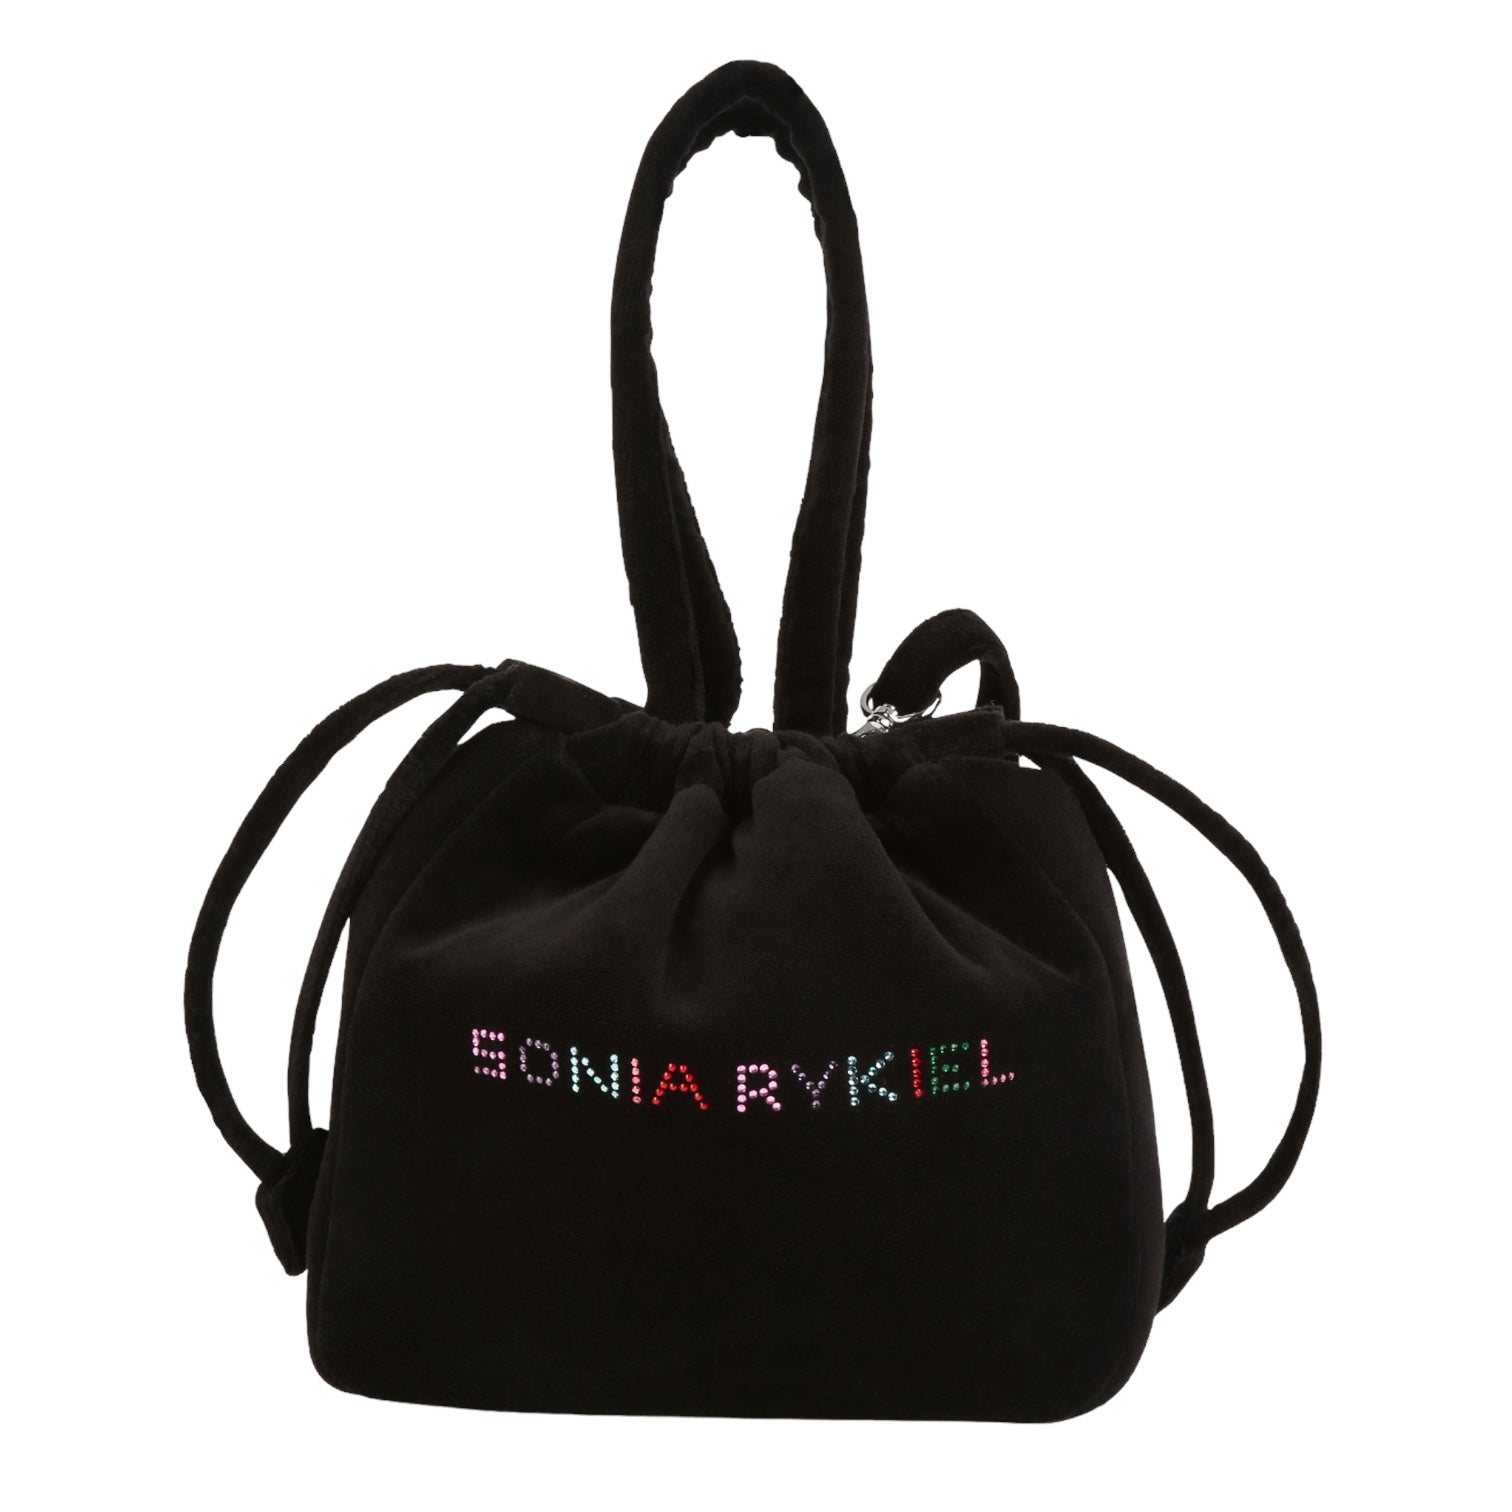 Klassificer grammatik Kompliment Sonia Rykiel Black Mini Me Shoulder Bag – Buttons and Bows